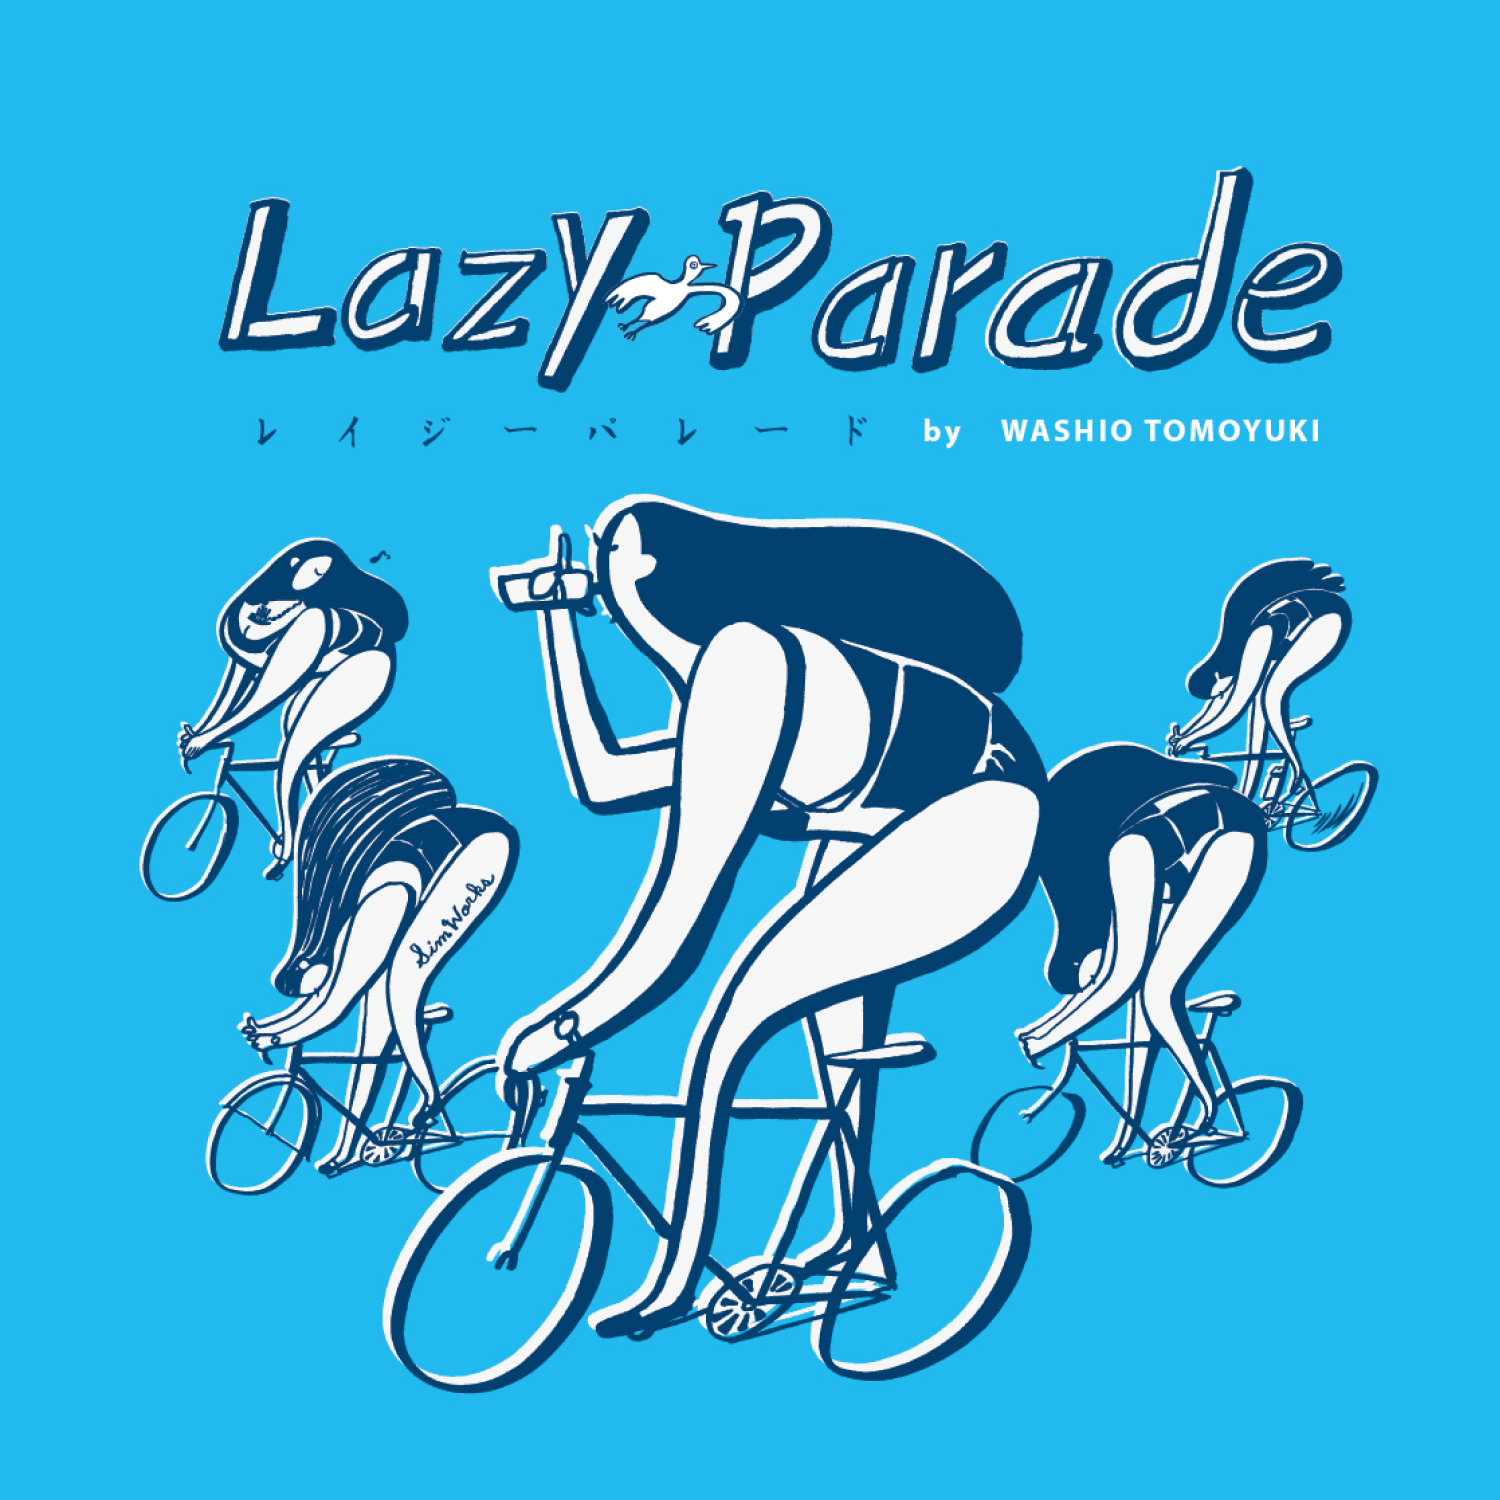 LazyParade by WASHIO TOMOYUKI